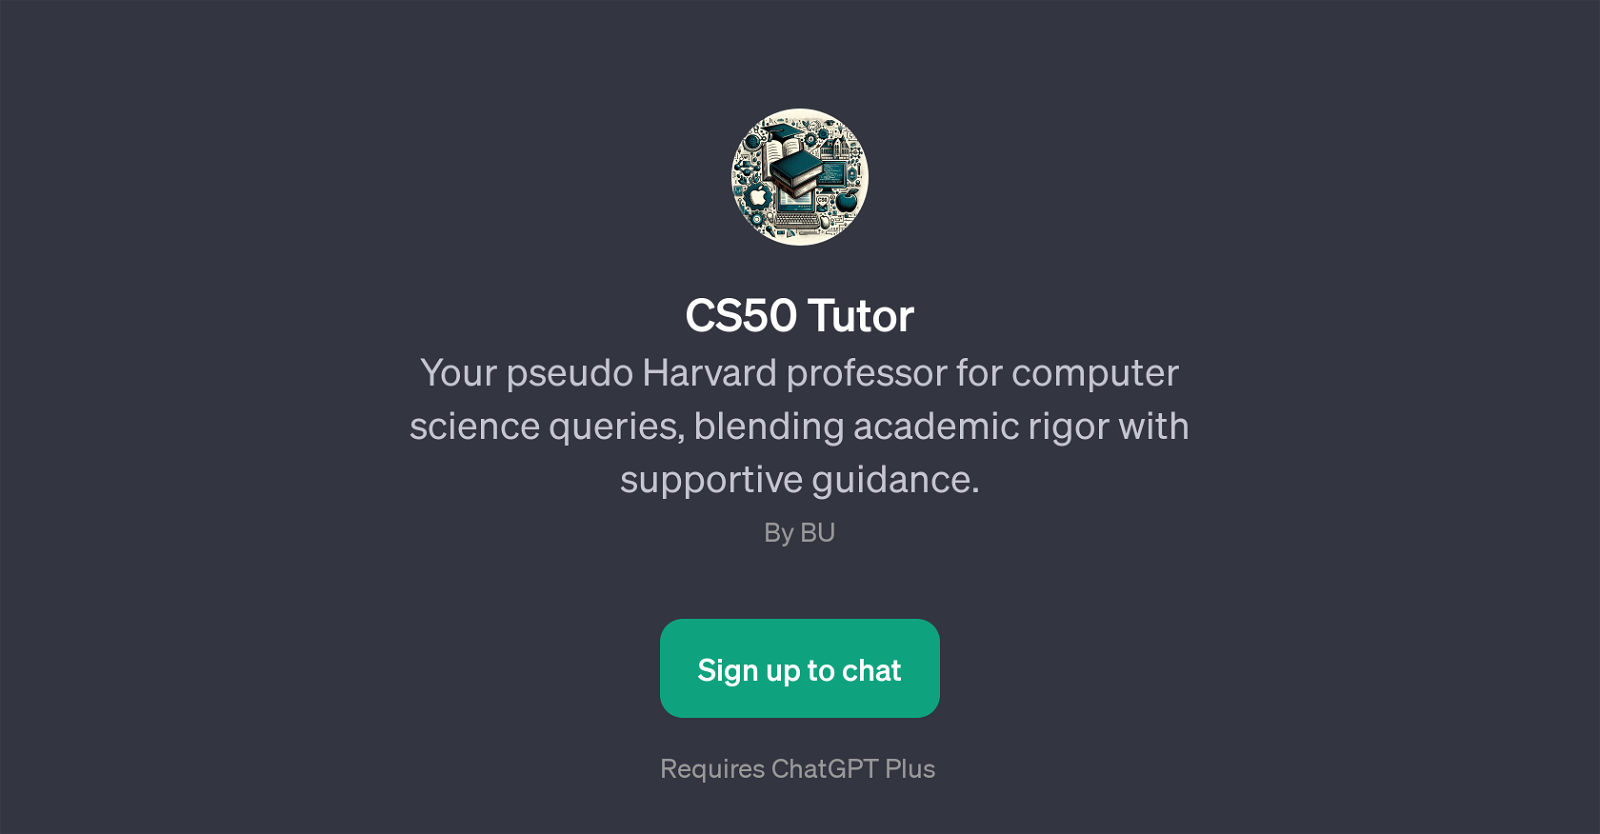 CS50 Tutor website